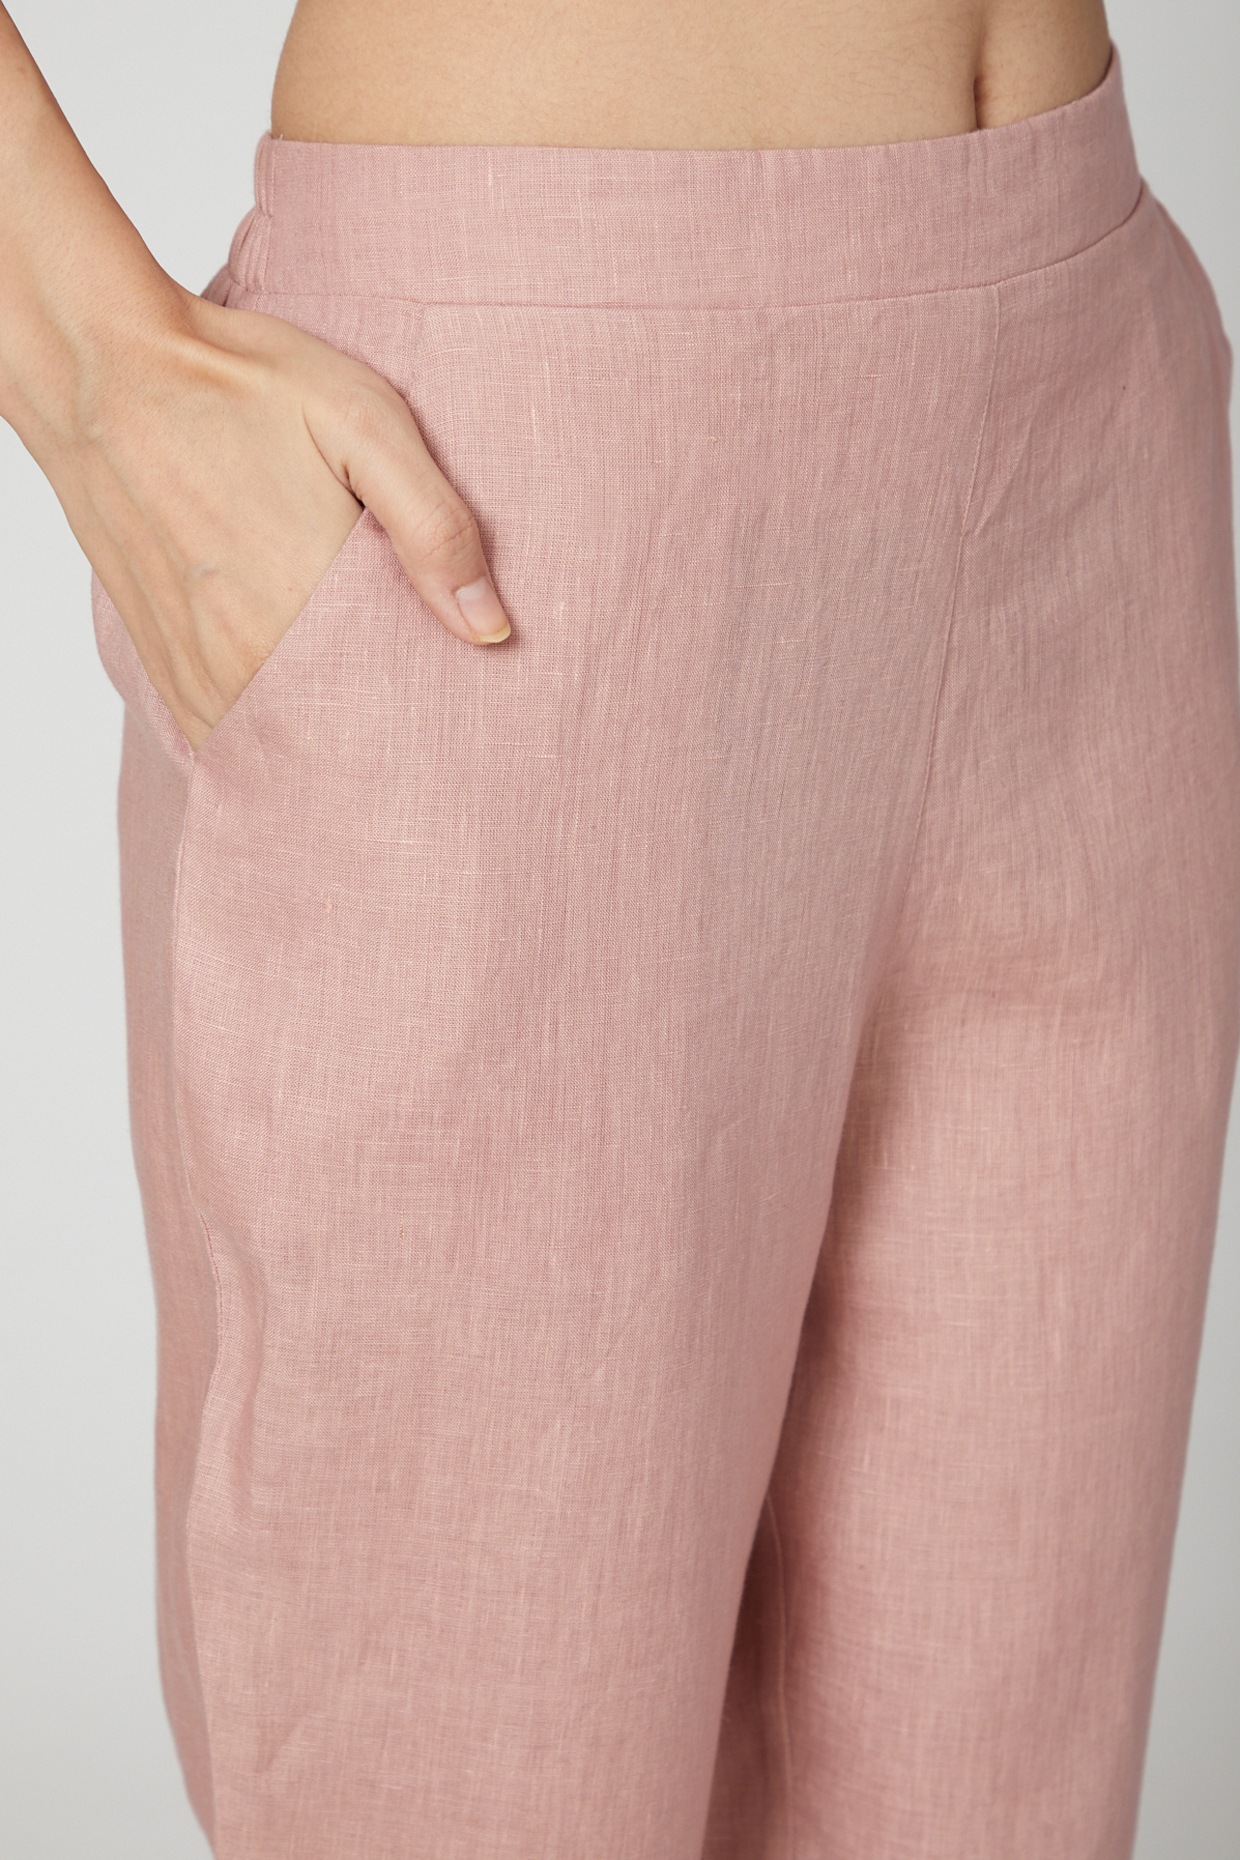 TUSSAH FAE SPLIT - Trousers - pale pink/light pink - Zalando.de